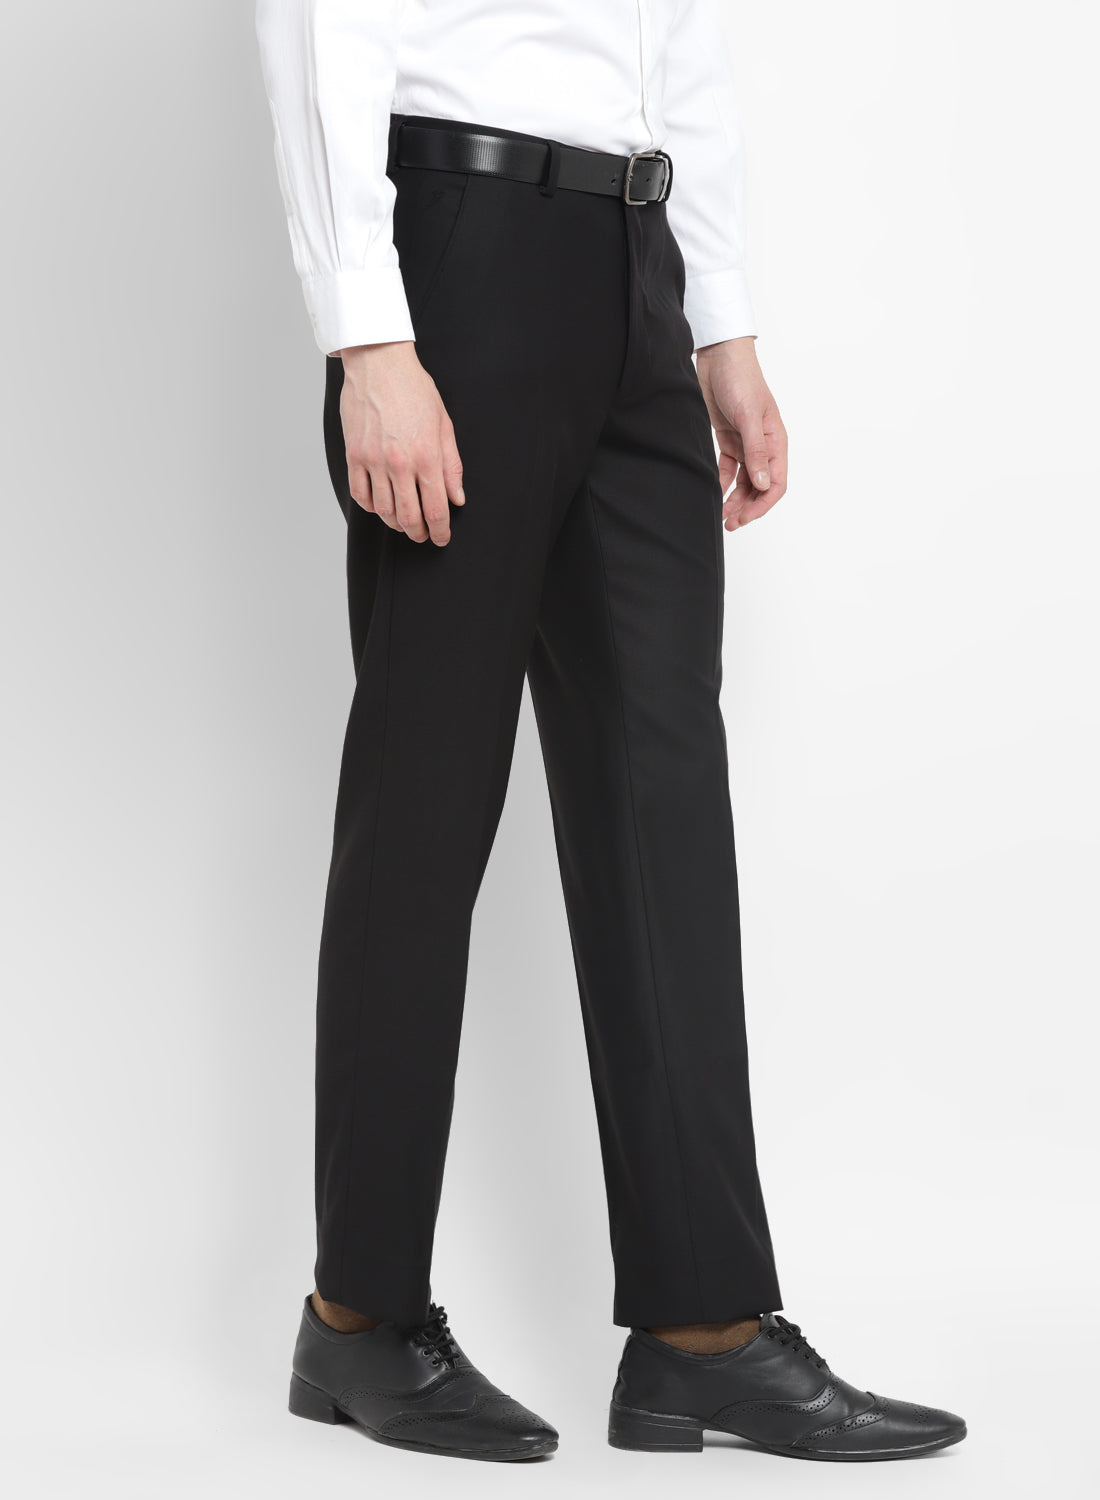 Saint Germain fitted pants | Hermès USA